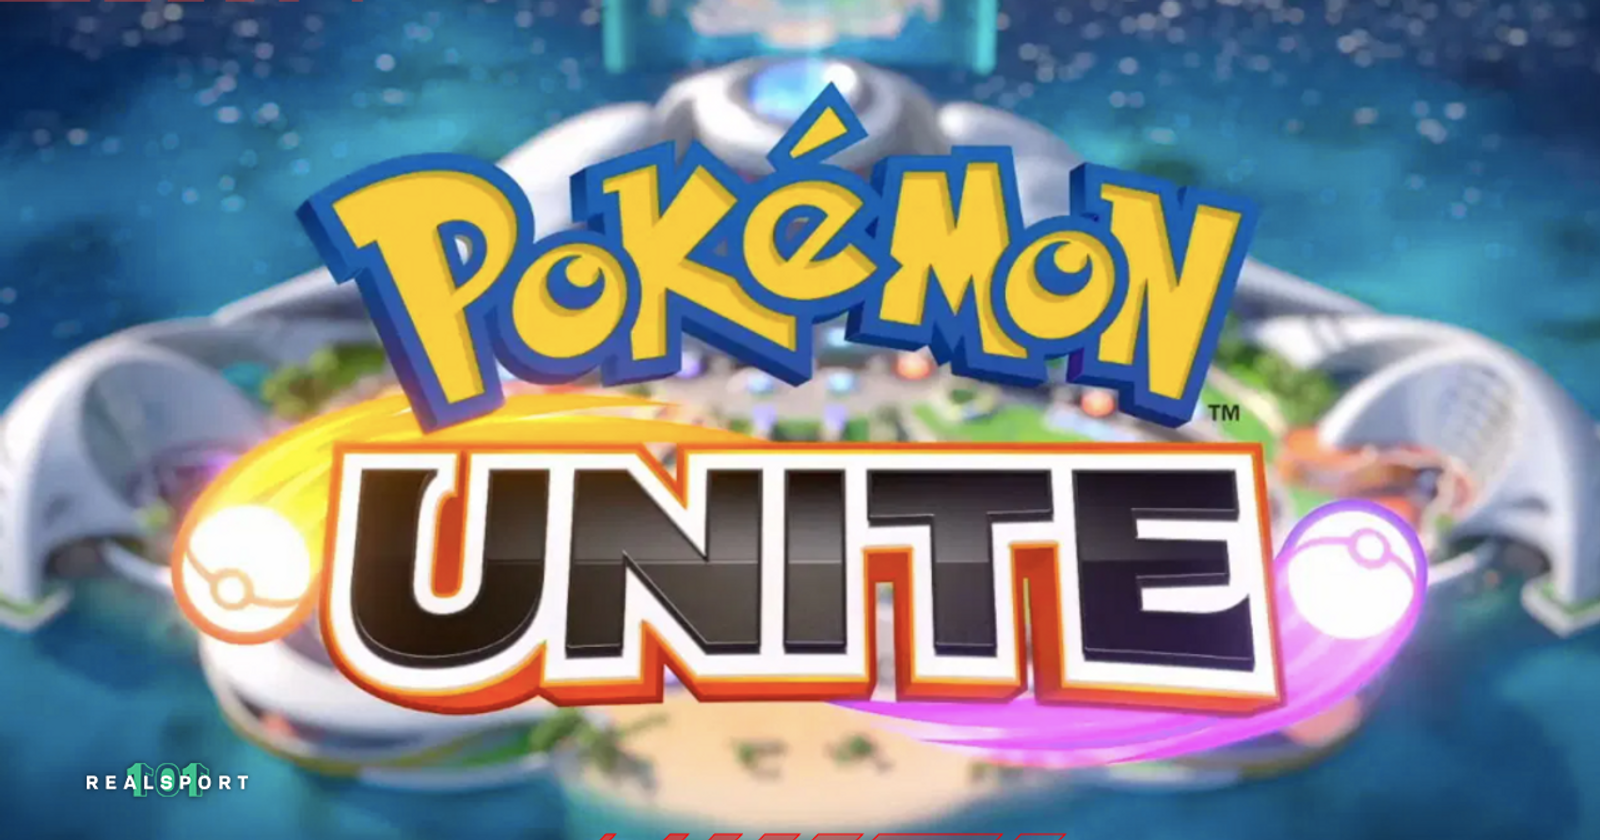 Everything we know about Pokemon Unite on PC - Dexerto